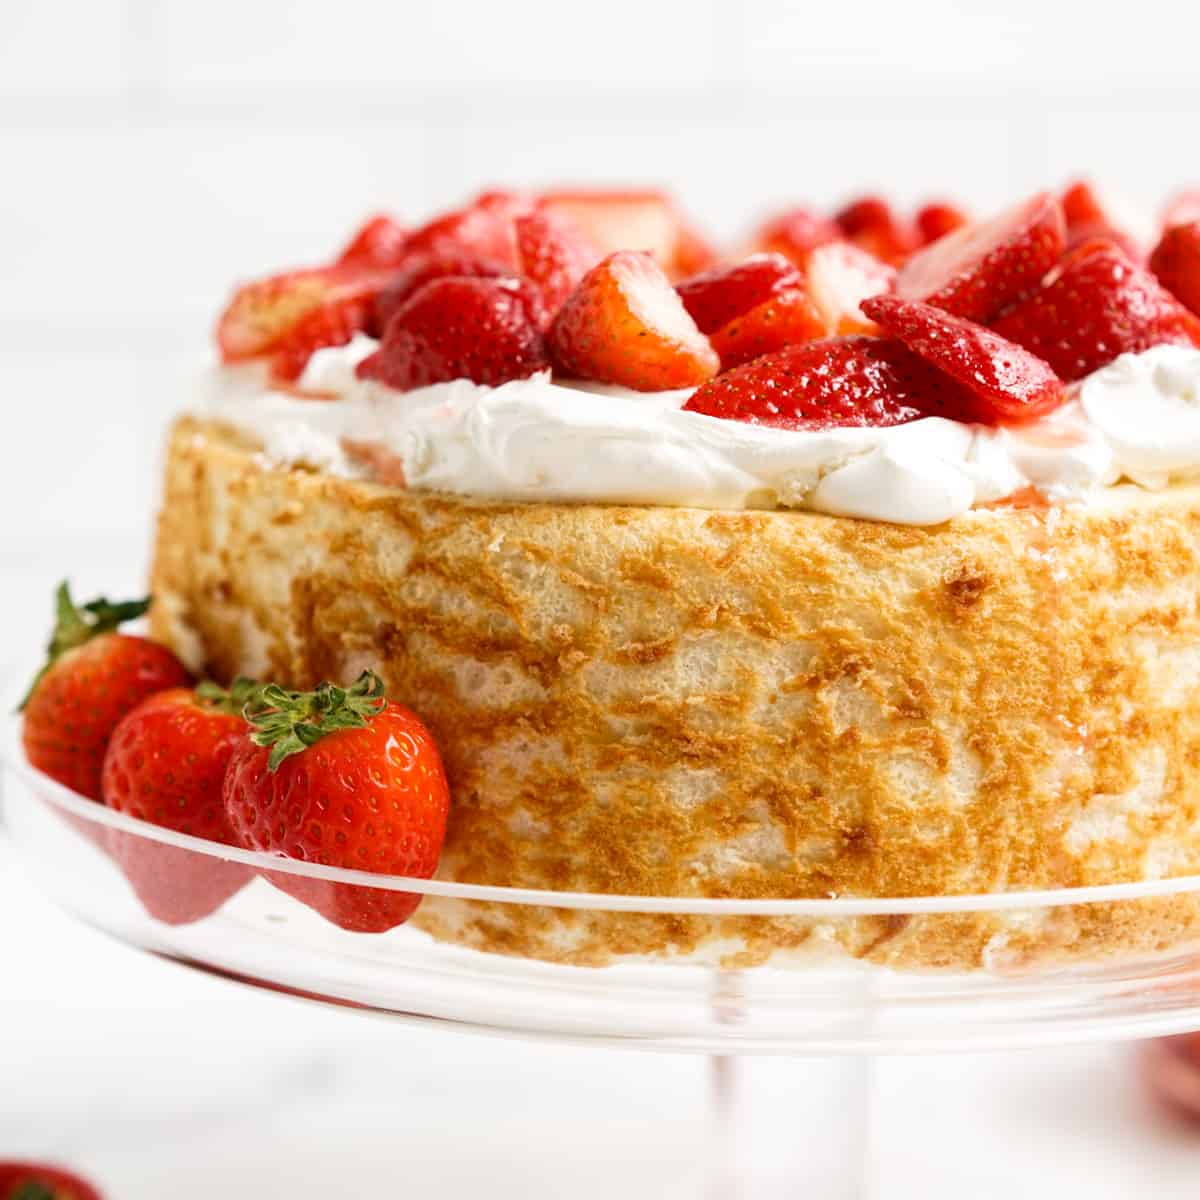 Strawberry Shortcake with Angel Food Cake